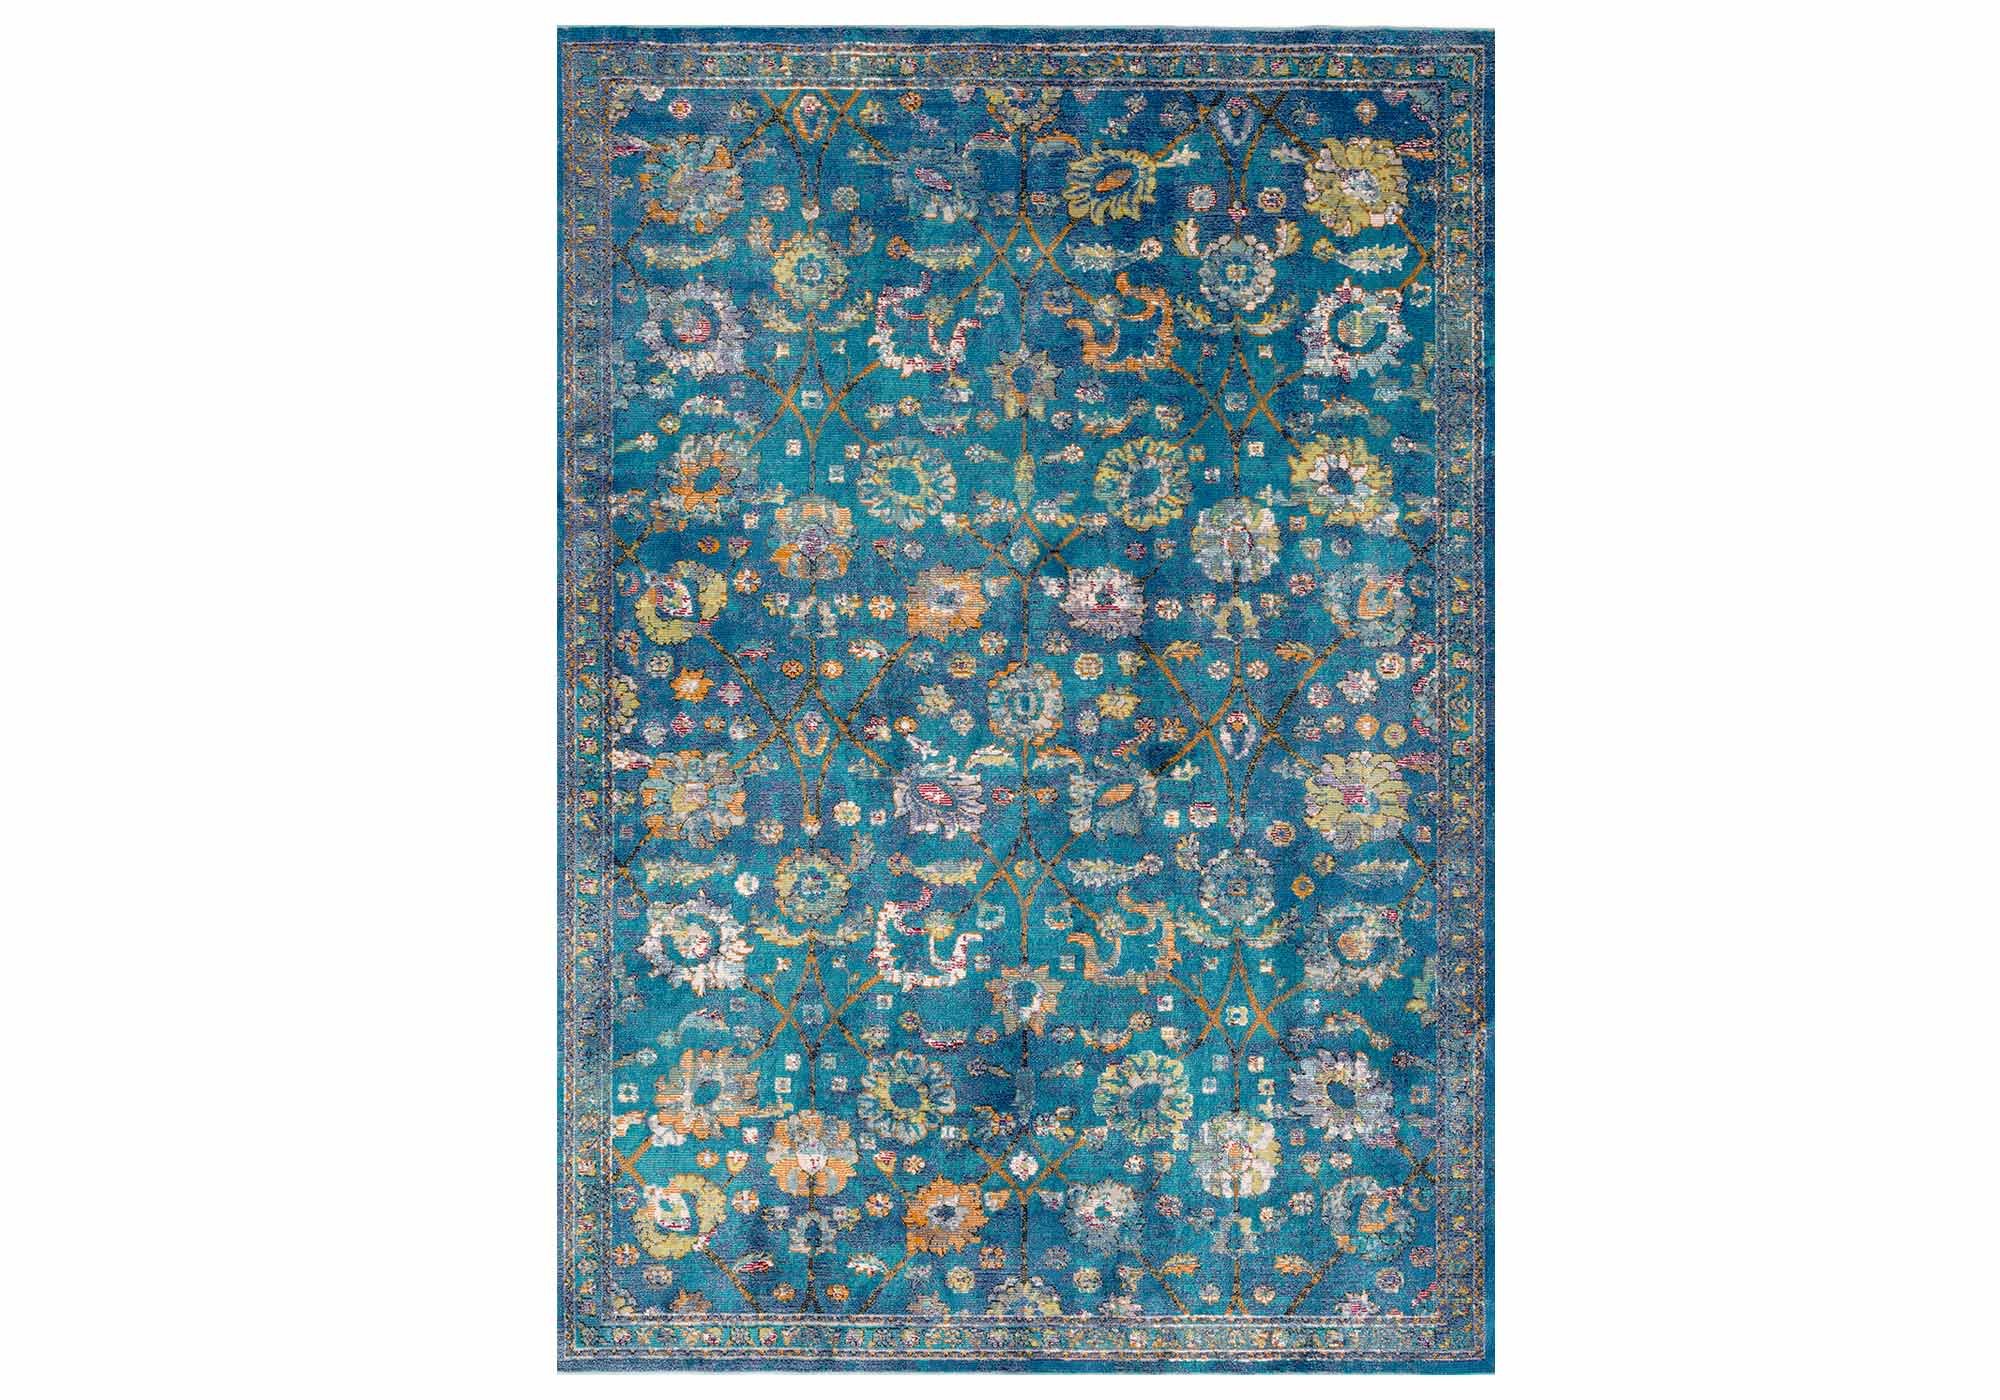 Festival Teppich 80 x 150 cm - mehrfarbig - 6 mm Florhöhe - Picasso 600